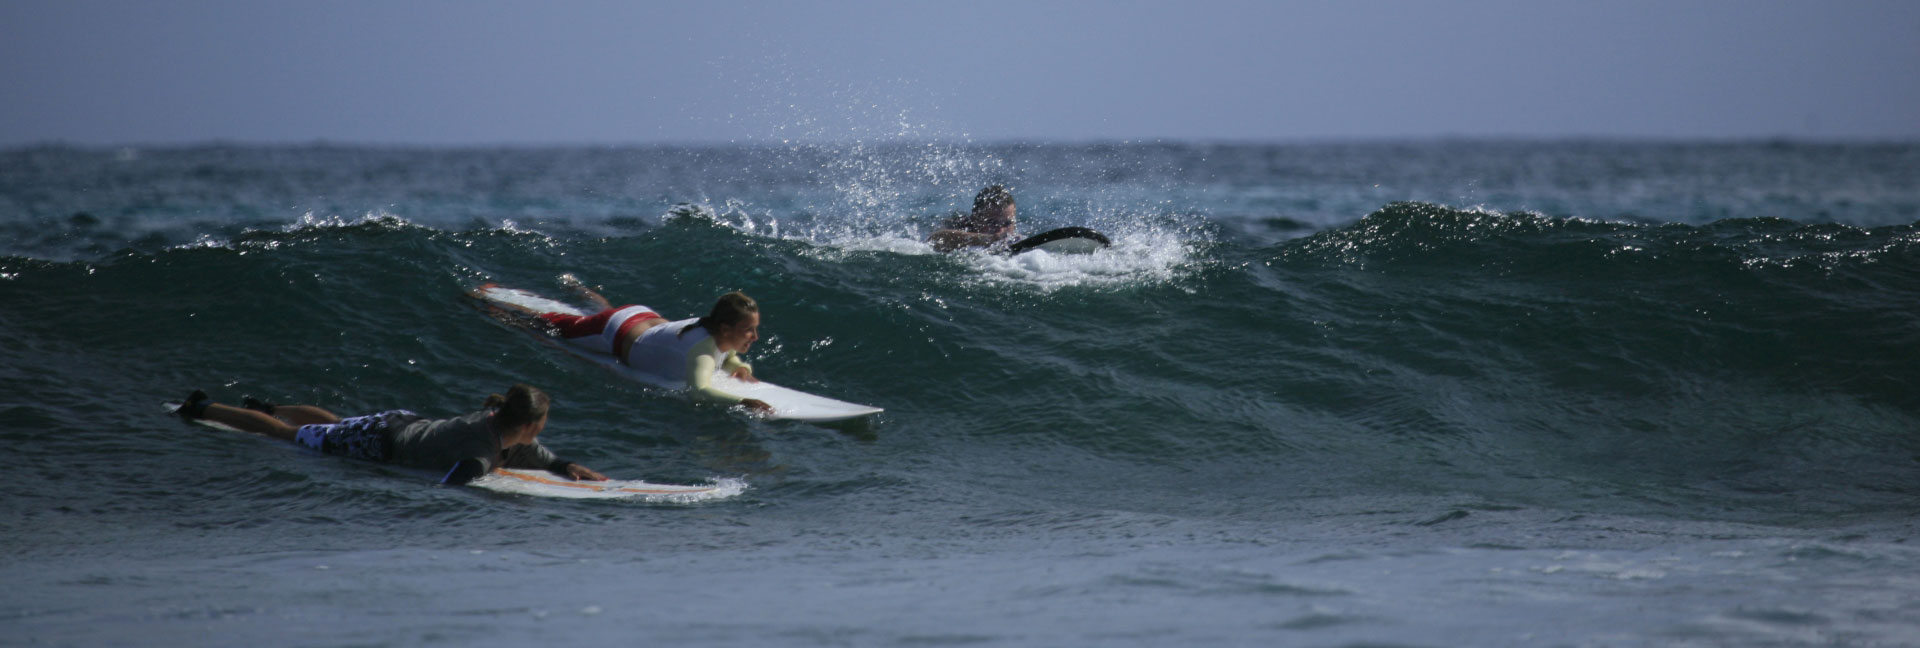 surf-lesson-le-morne-mauritius